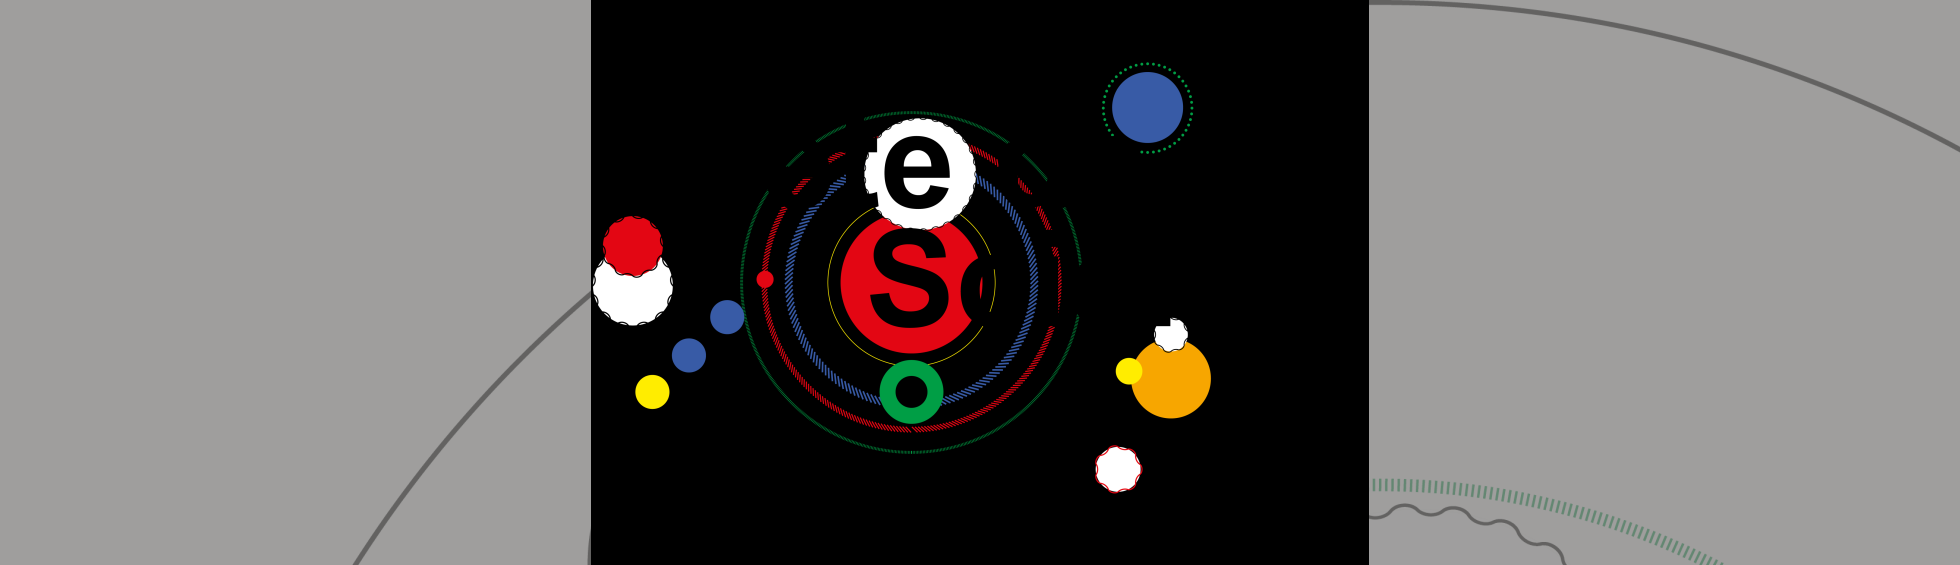 logo fête de la science 